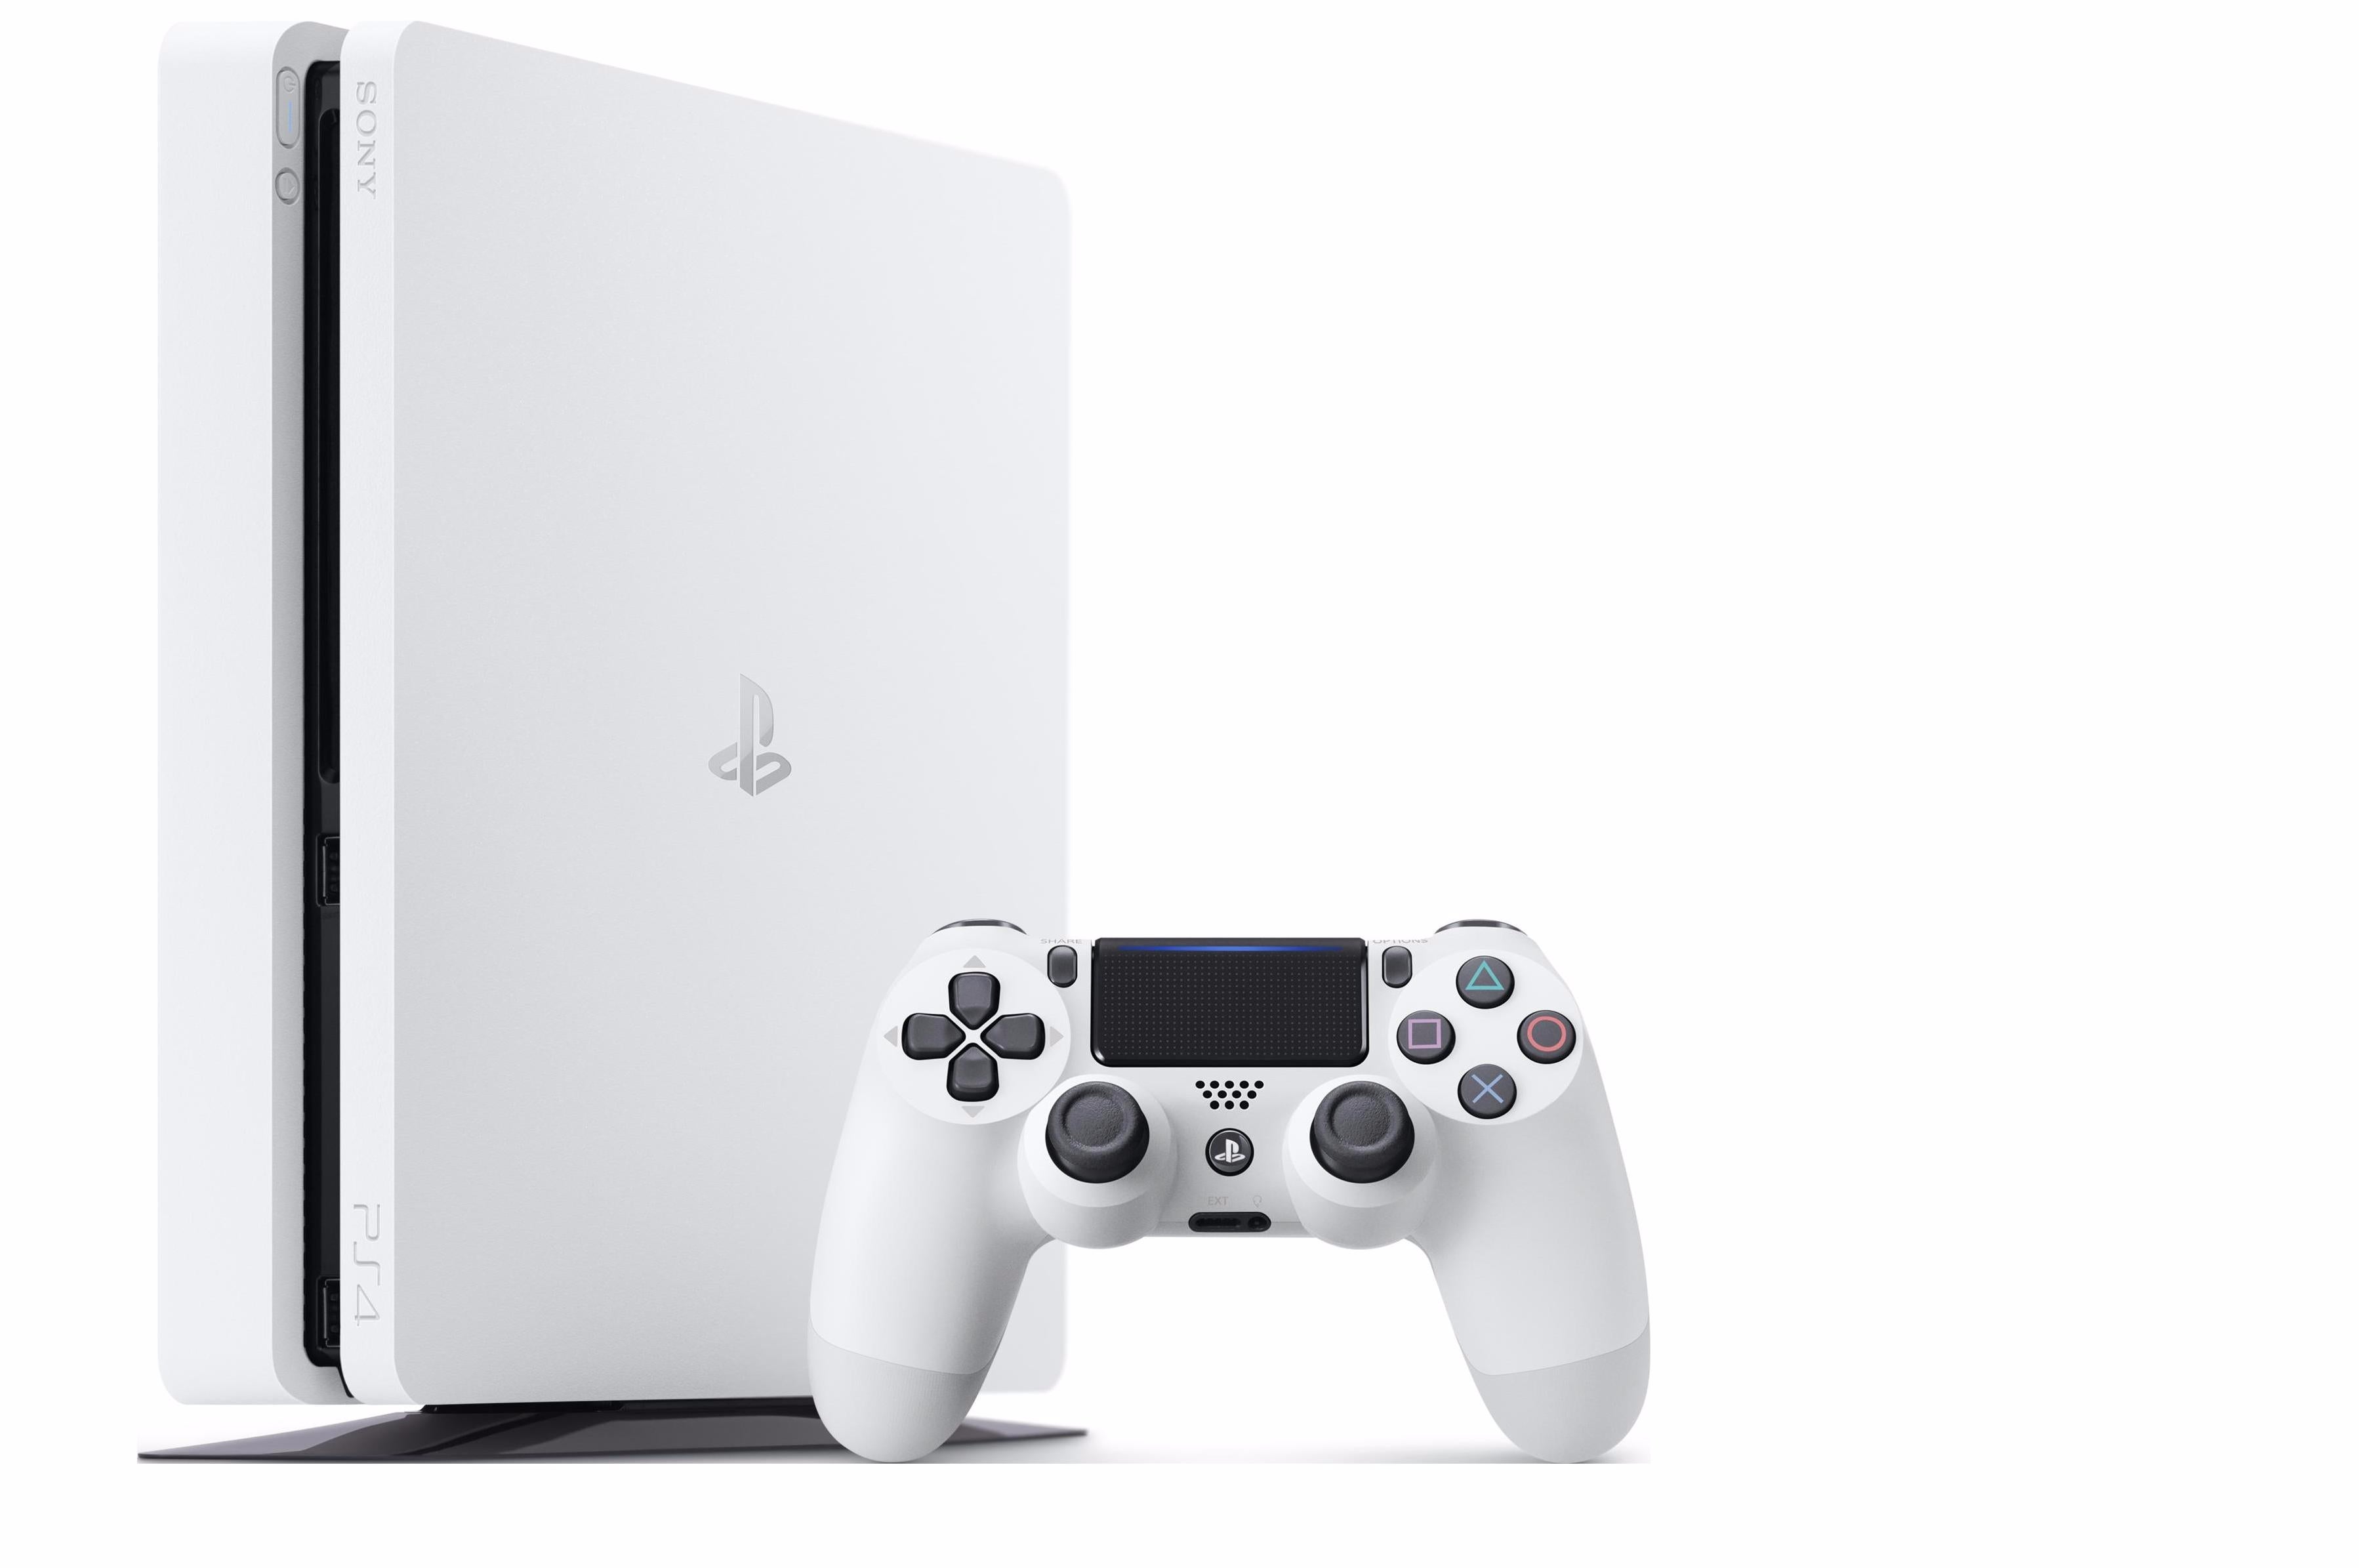 Glacier White PlayStation 4 slim model announced